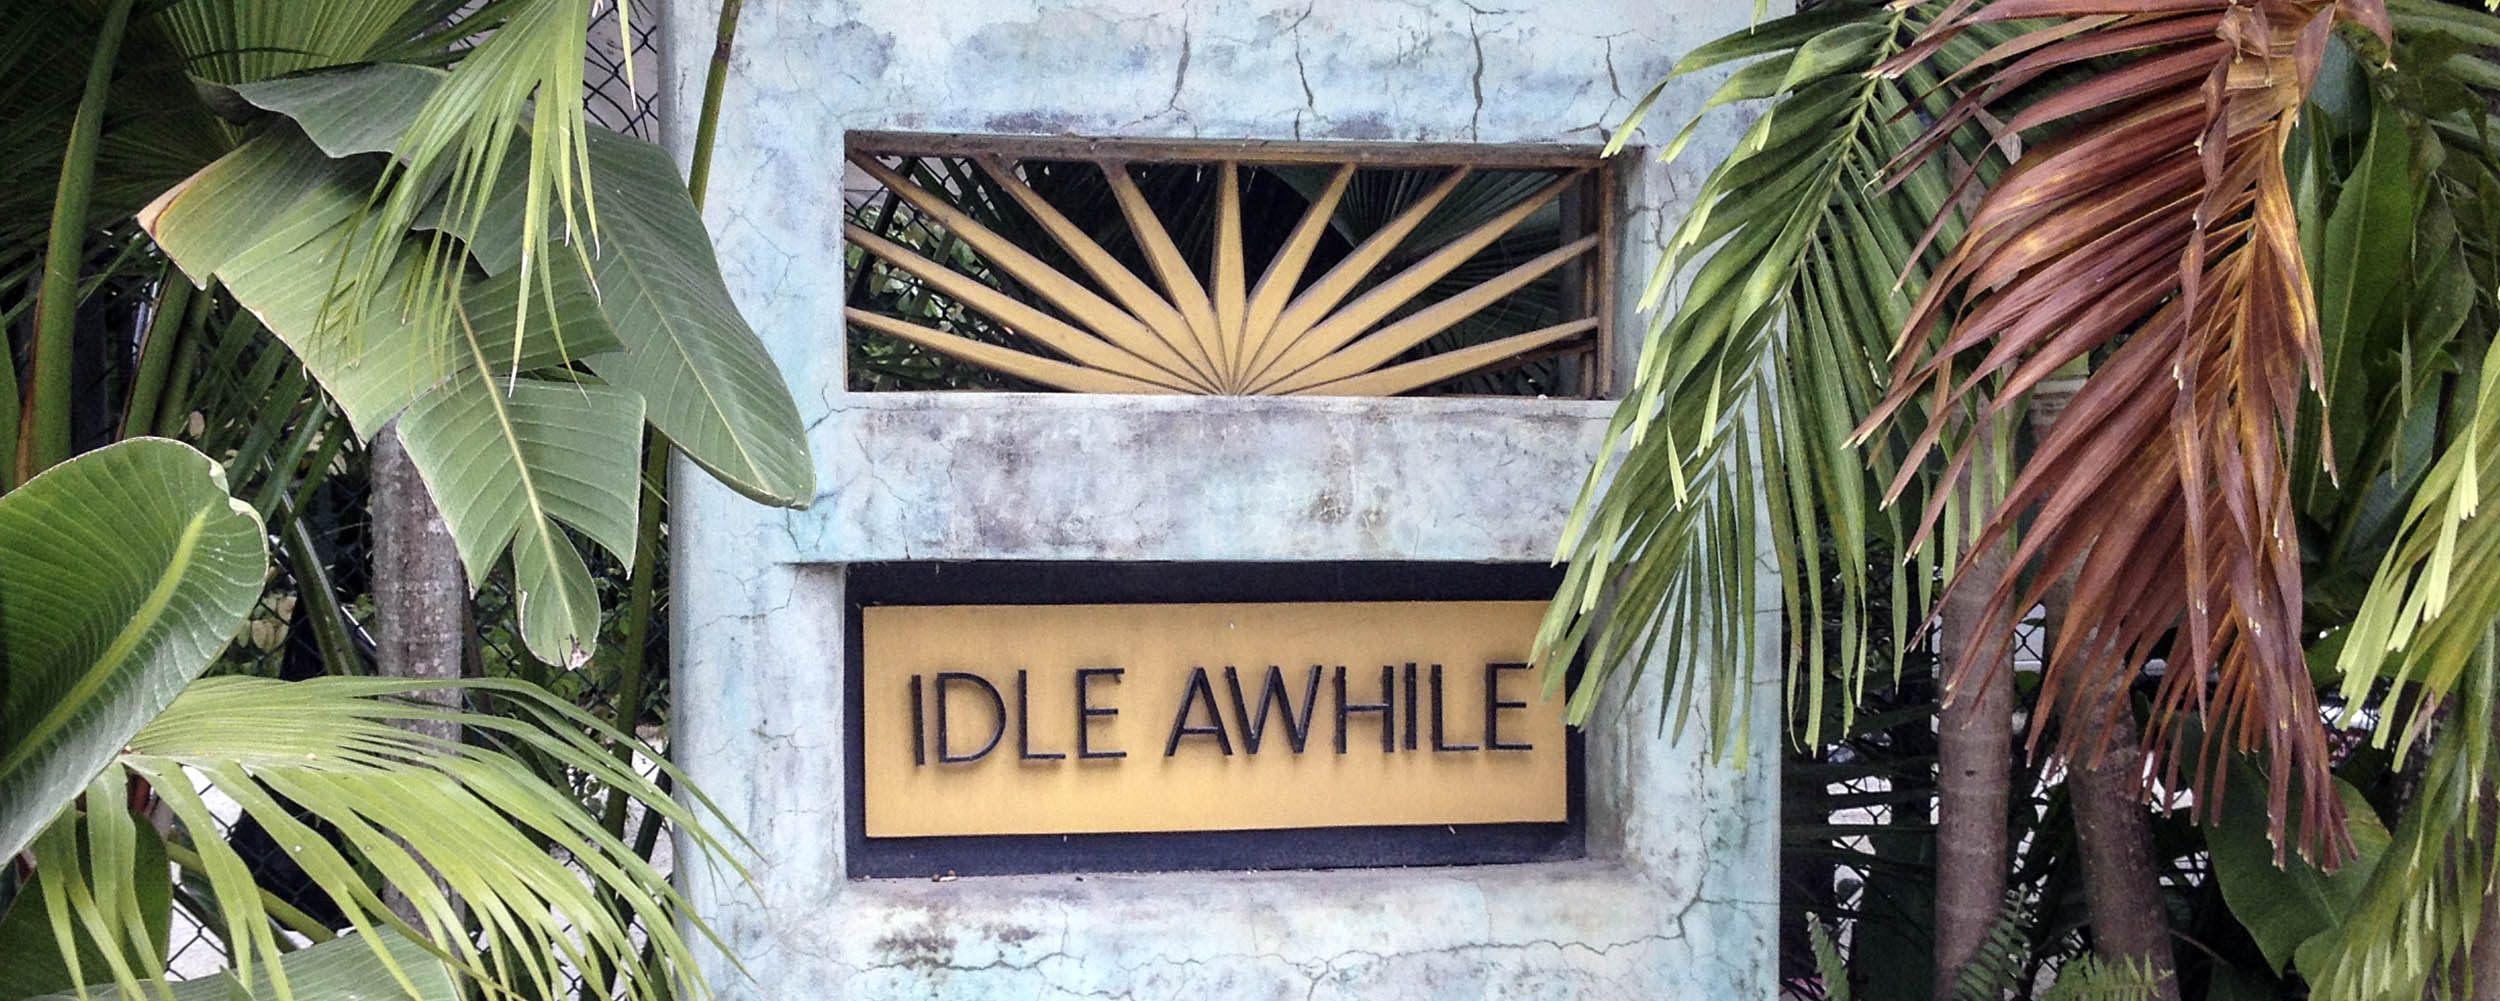 Idle Awhile - Negril Jamaica